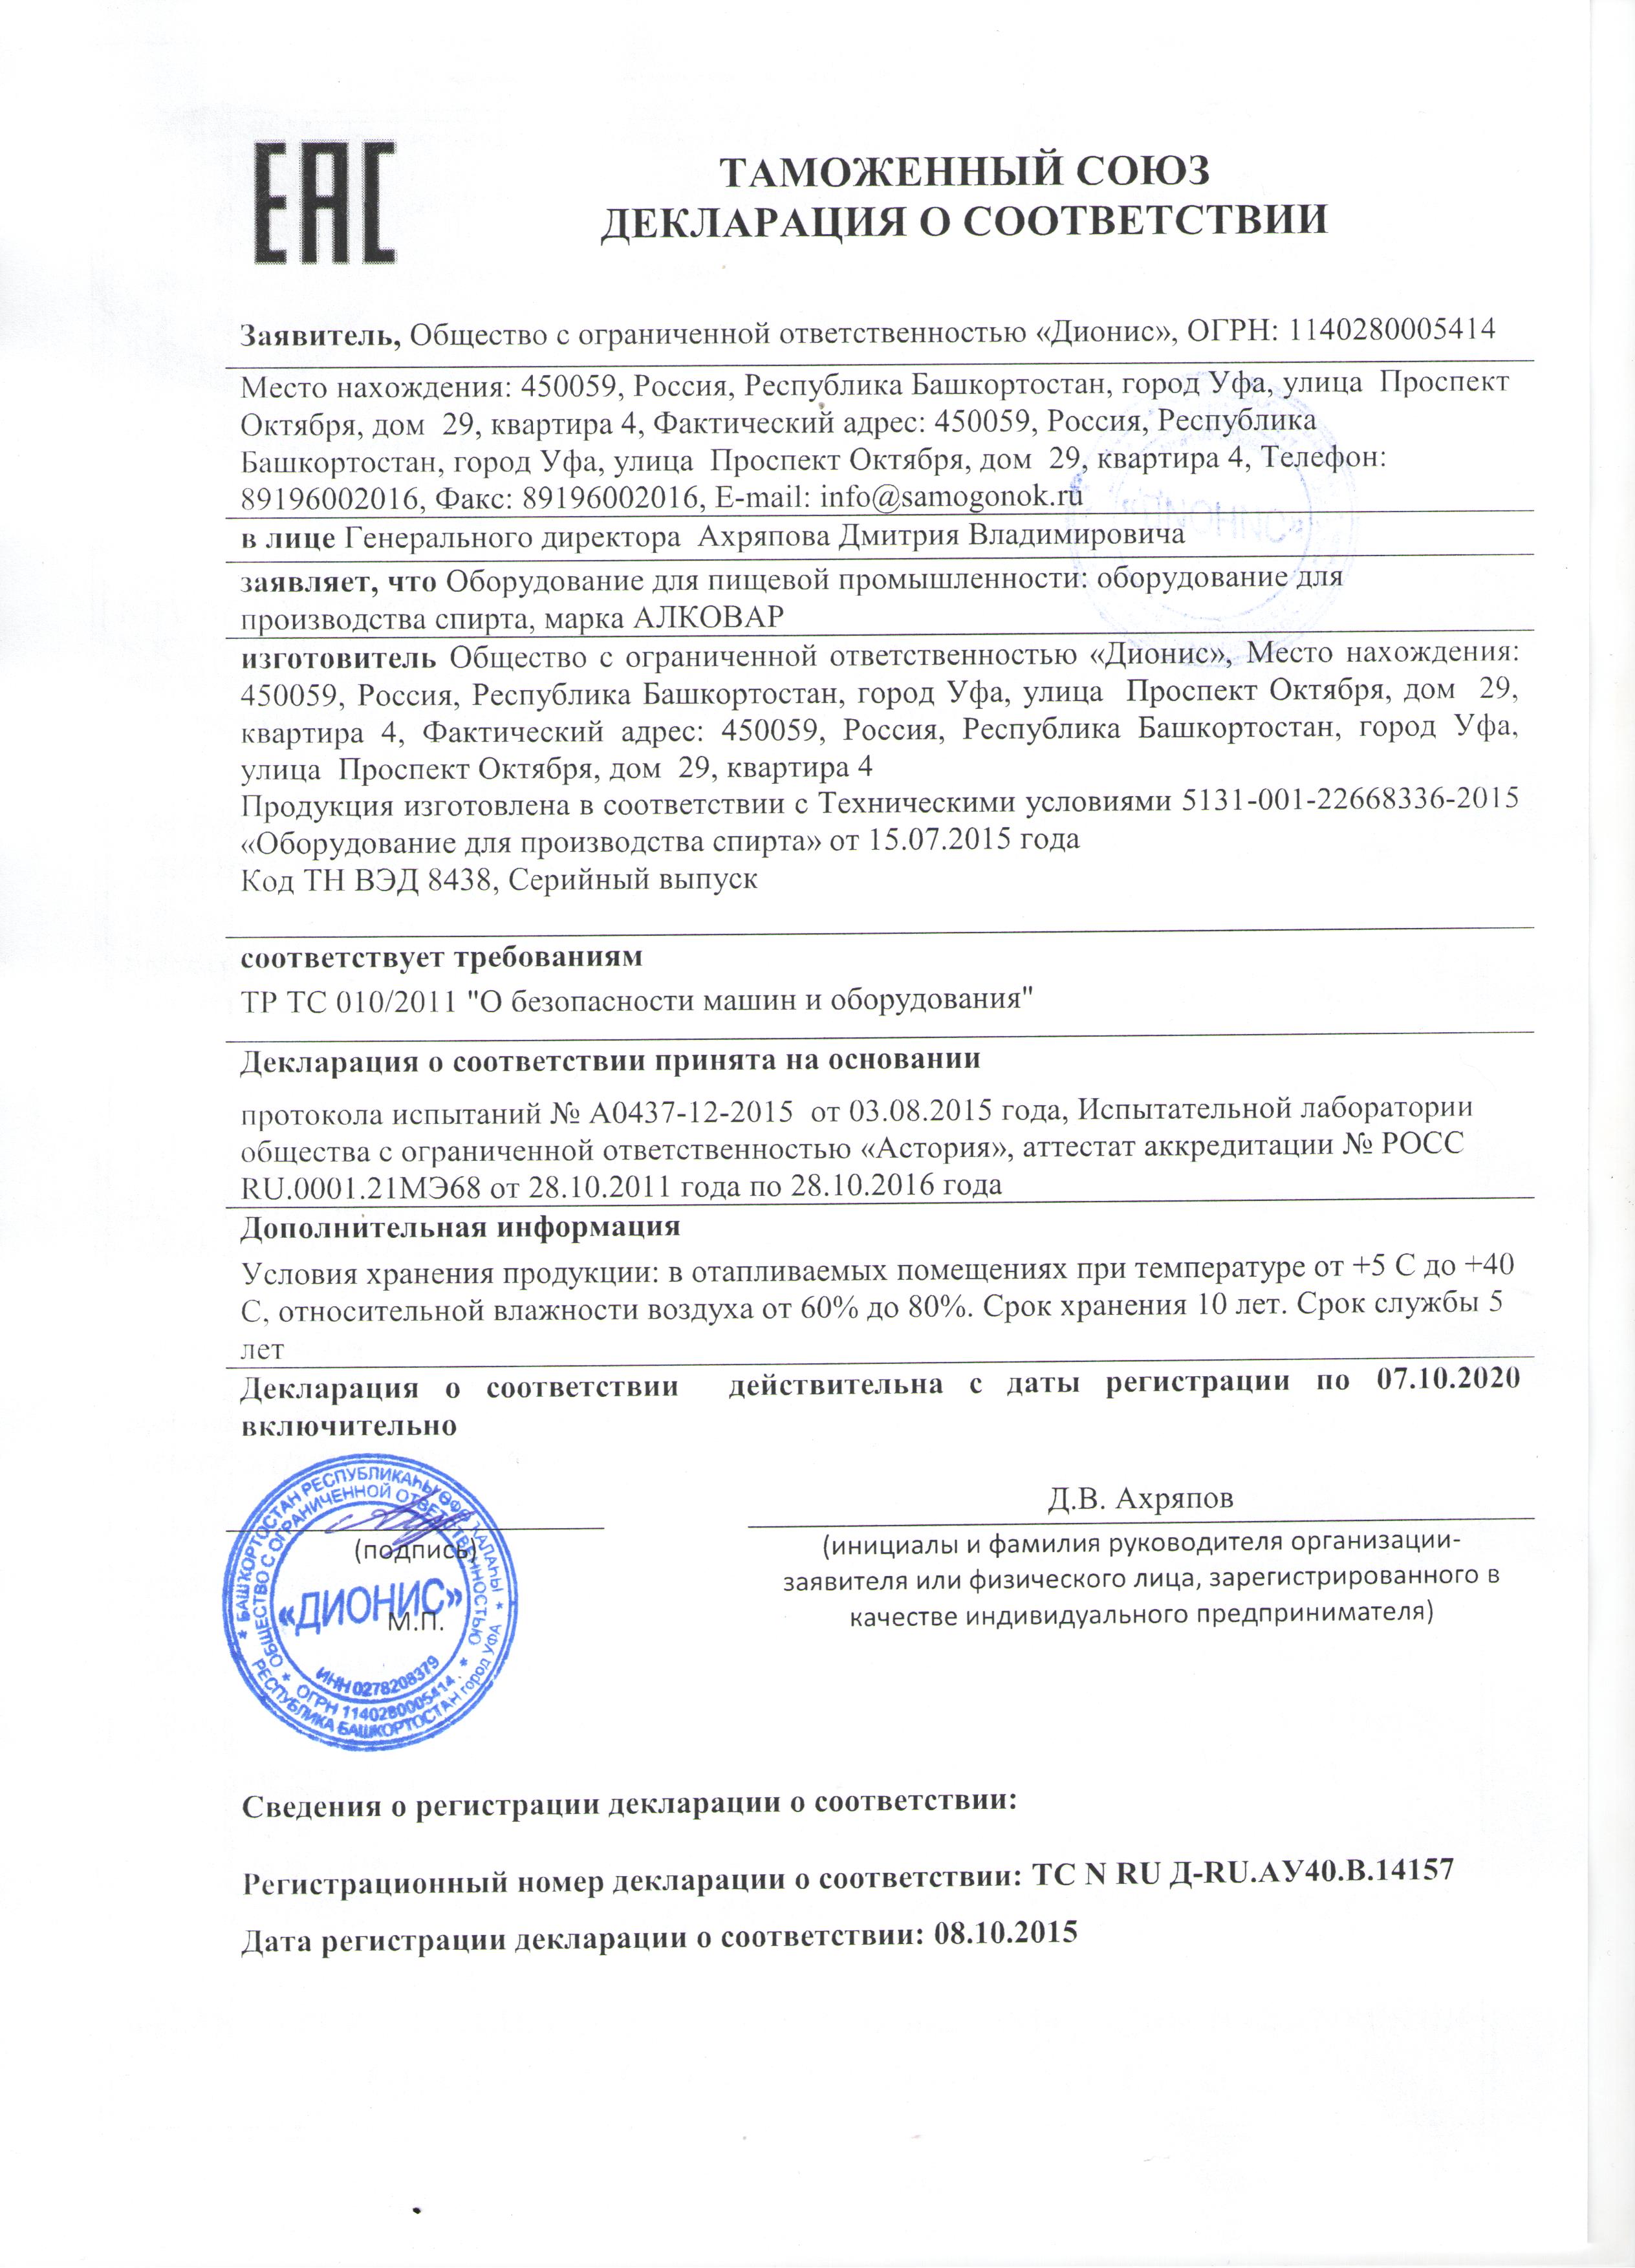 Декларация таможенного союза на все аппараты тм АЛКОВАР